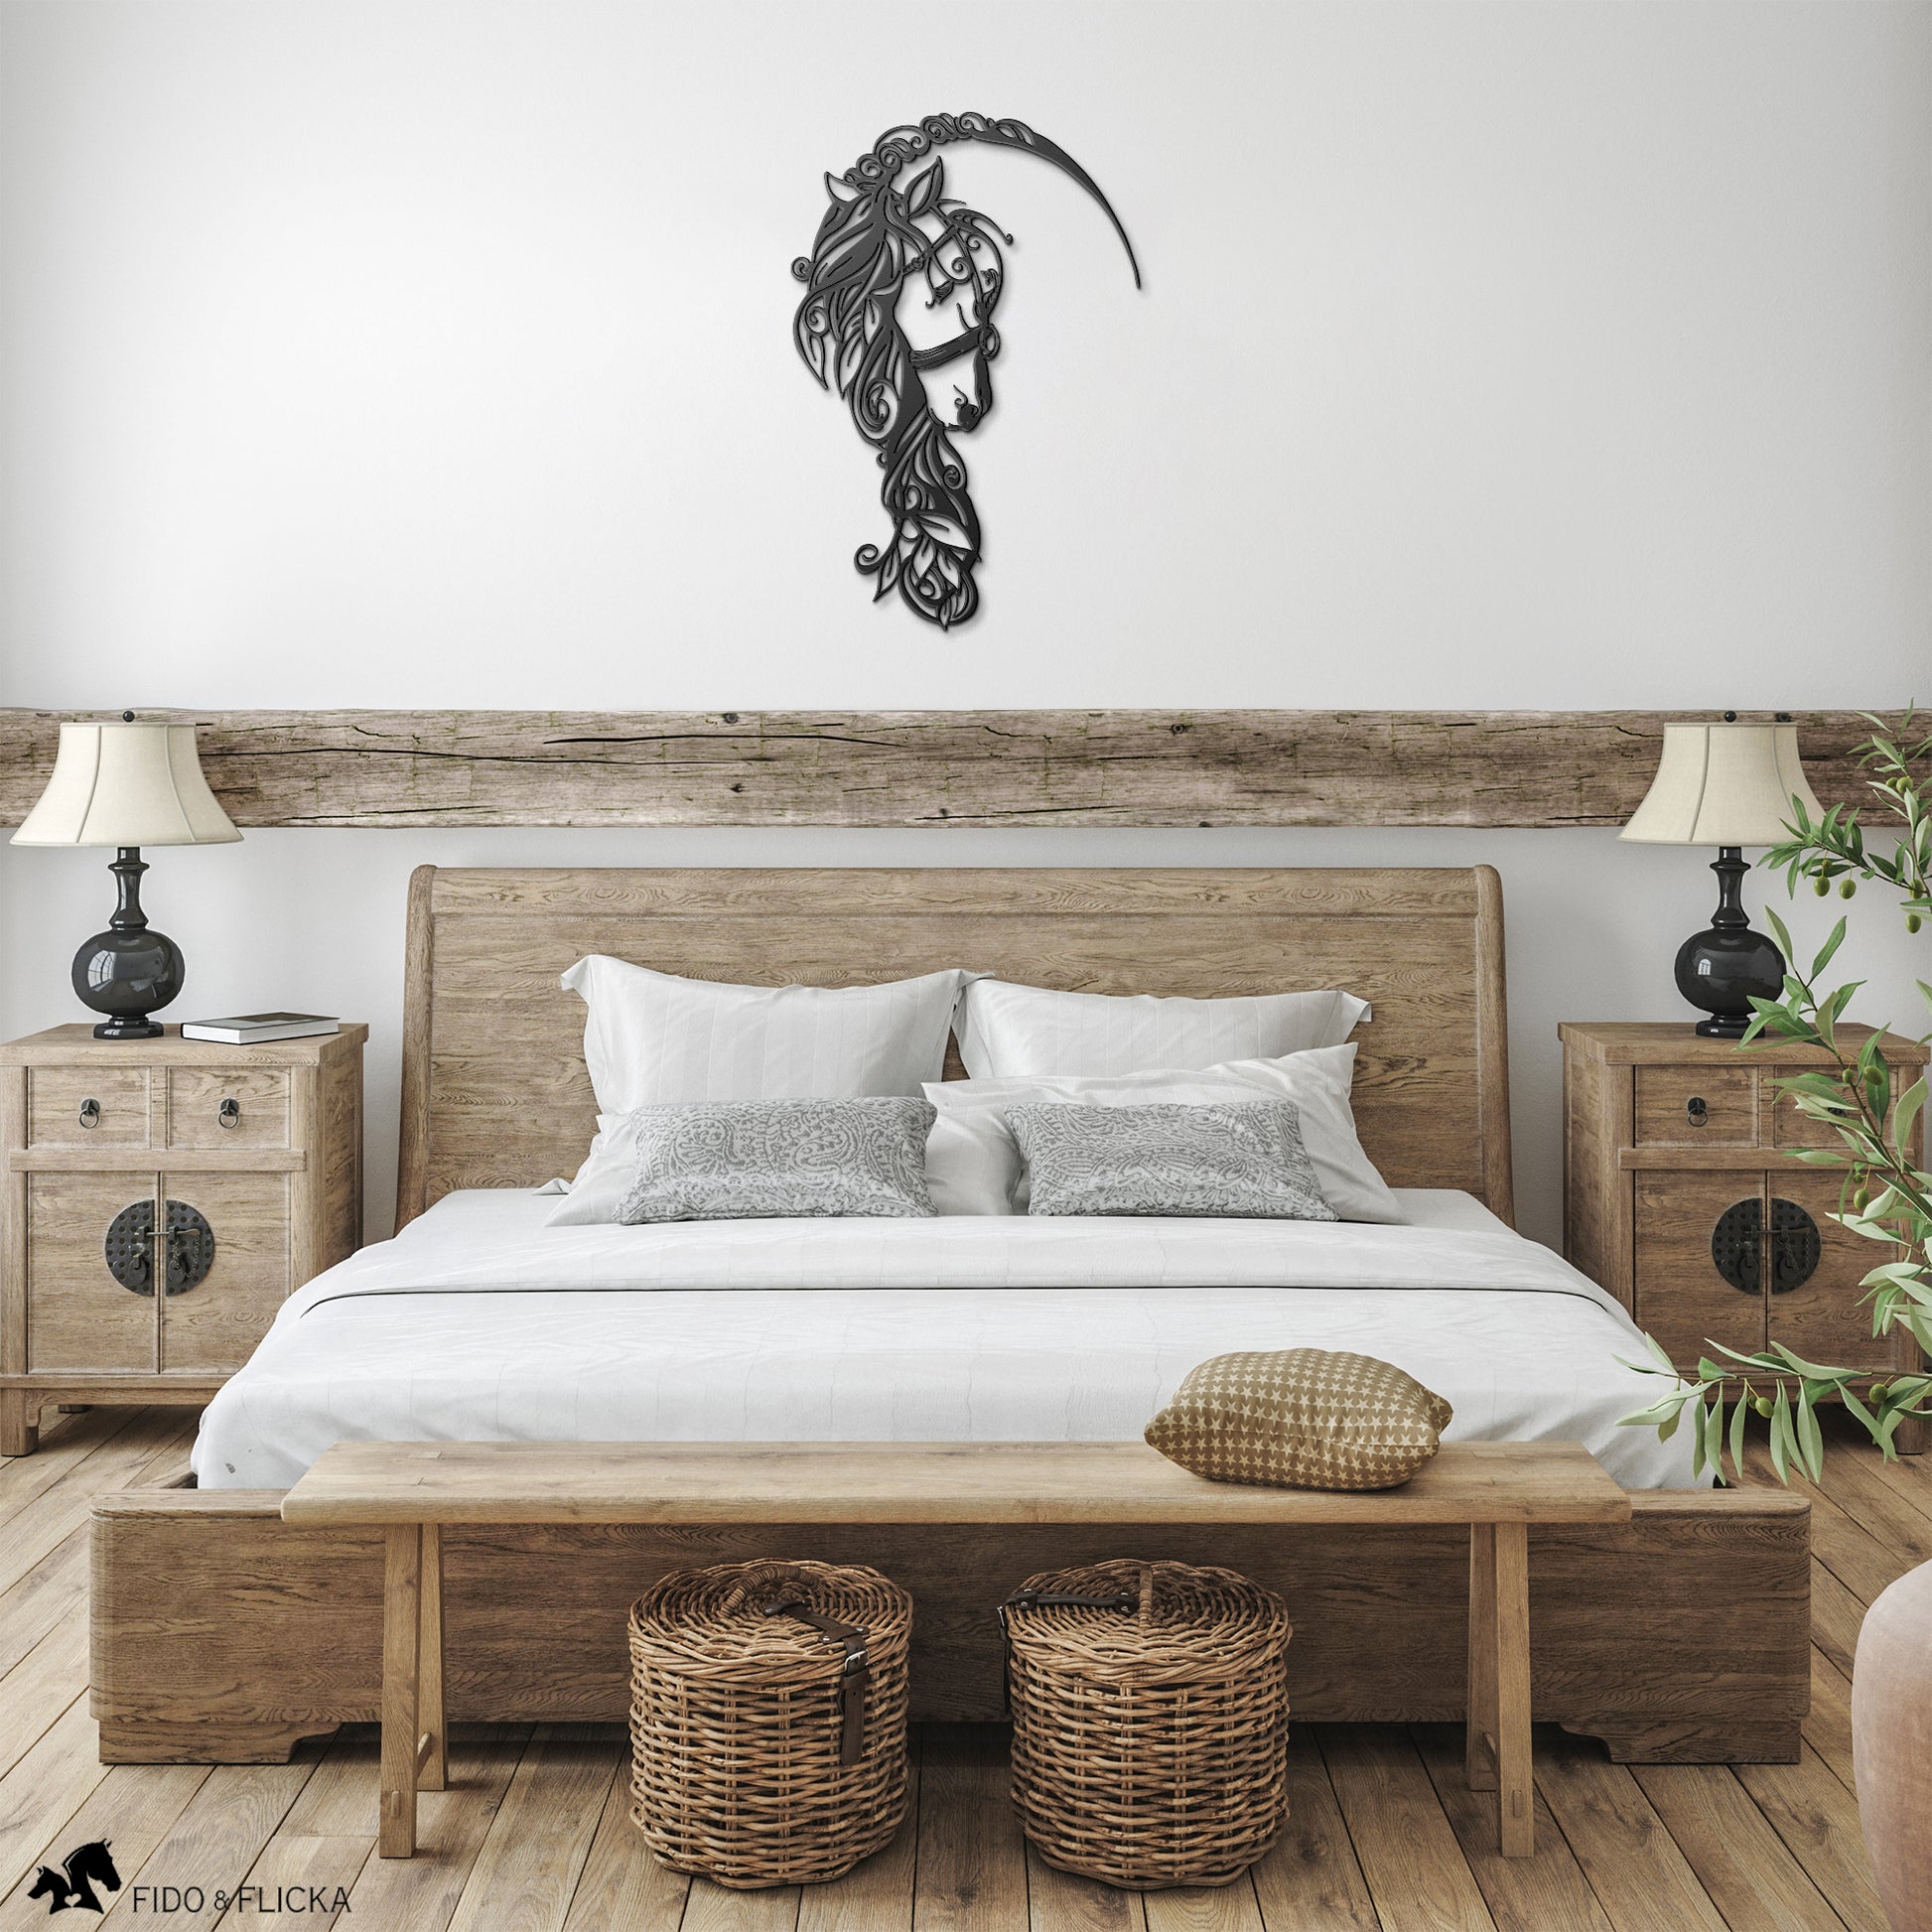 Horse mane with swirls metal wall art in bedroom